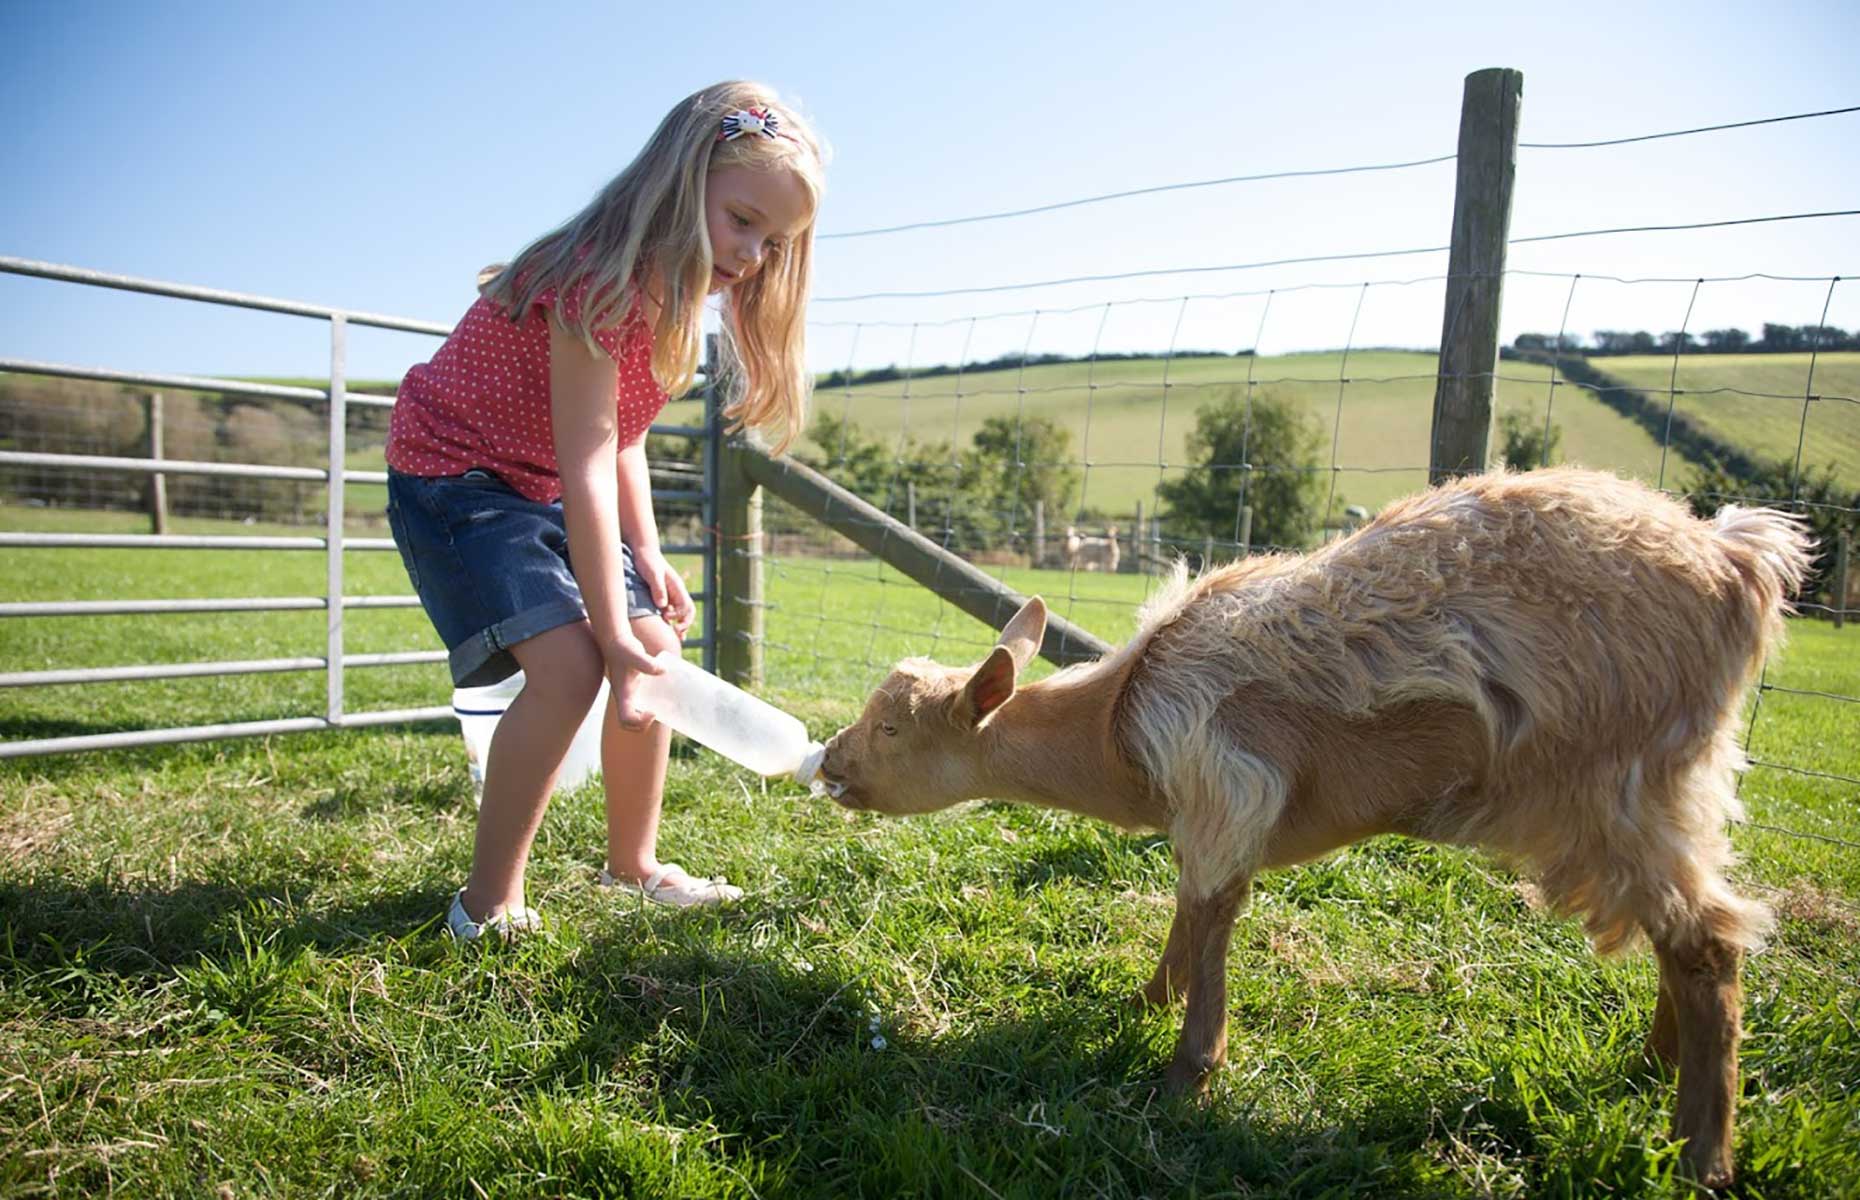 Feeding time at Nettlecombe Farm (Image: Courtesy of Nettlecombe Farm)